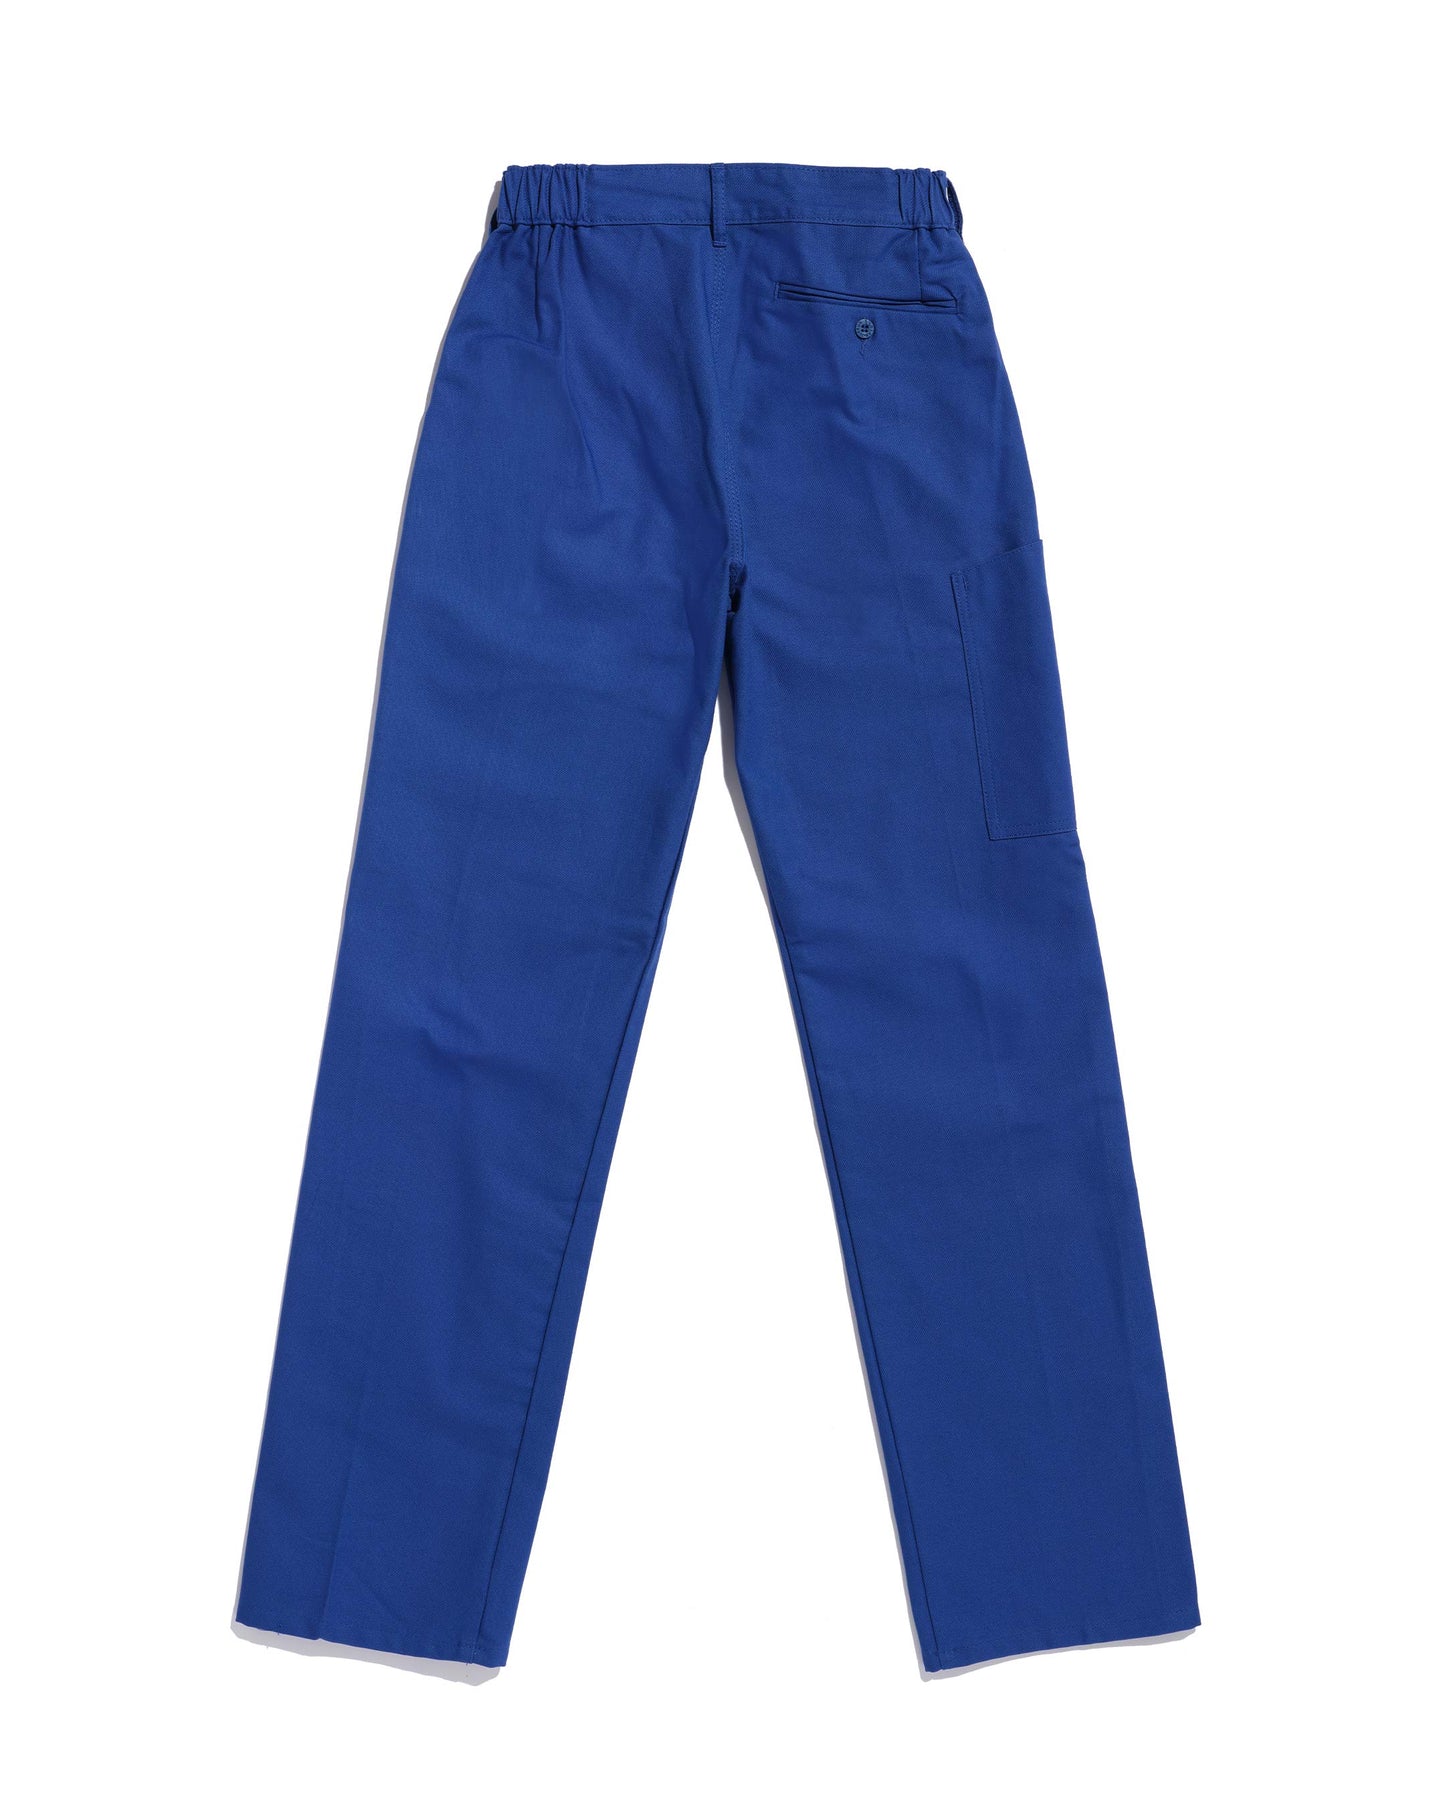 Pantalon de travail 100% coton - Bugatti - Le Laboureur